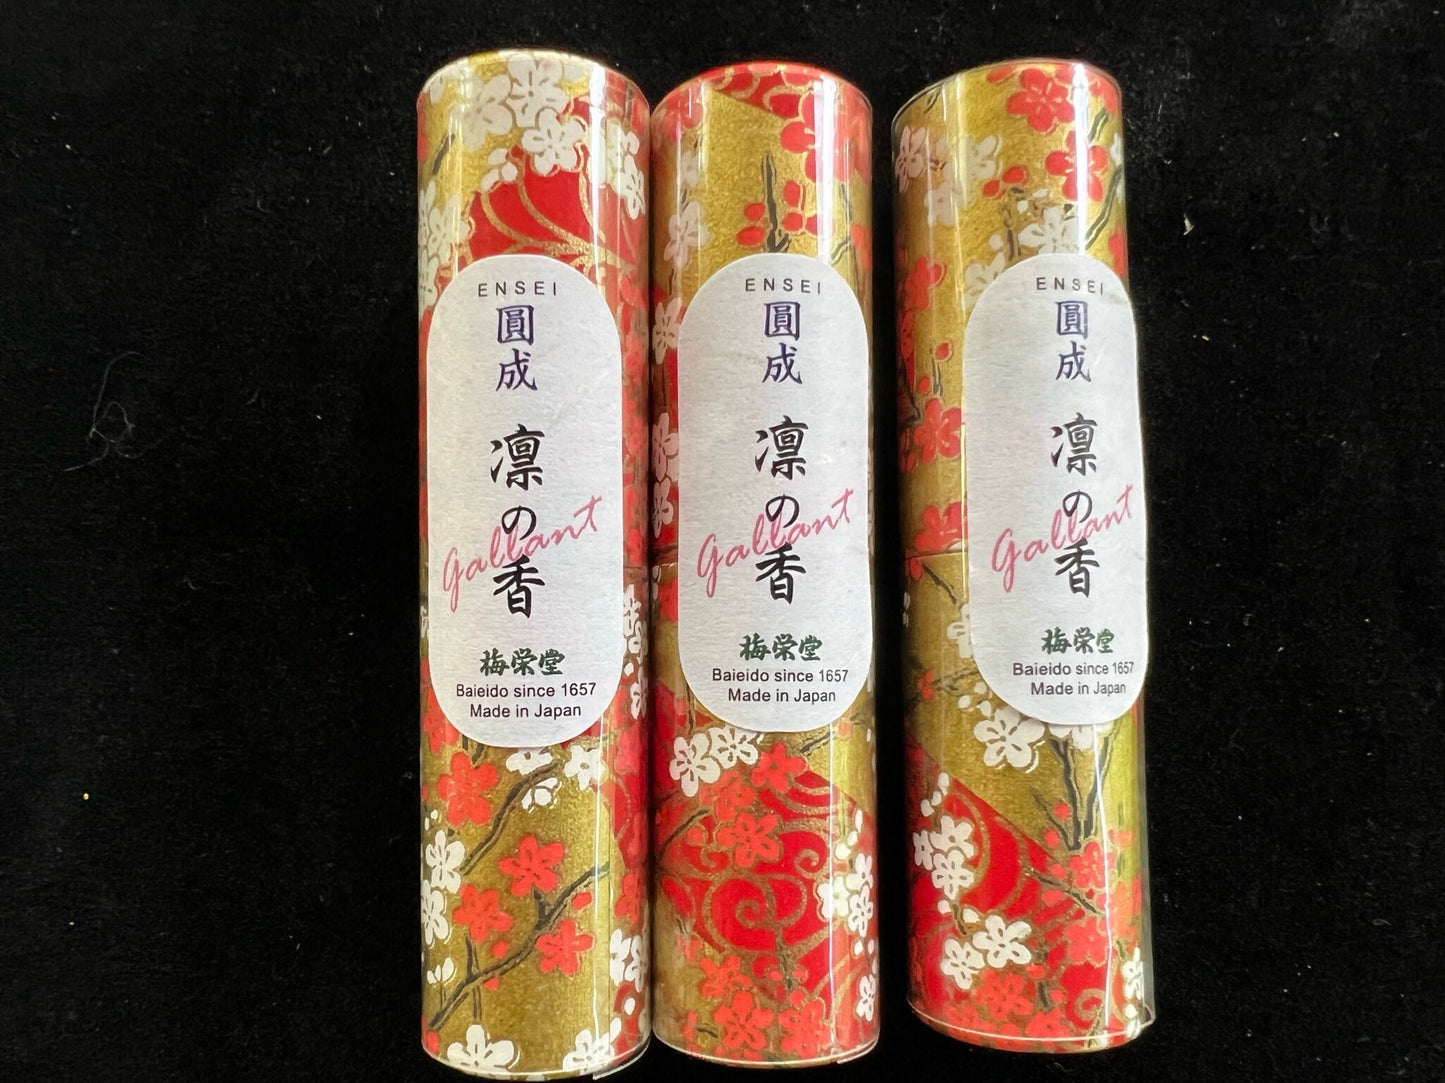 Baieido Ensei Gallant Incense | Japanese Incense | 20 sticks | 3 inch sticks | Aloeswood